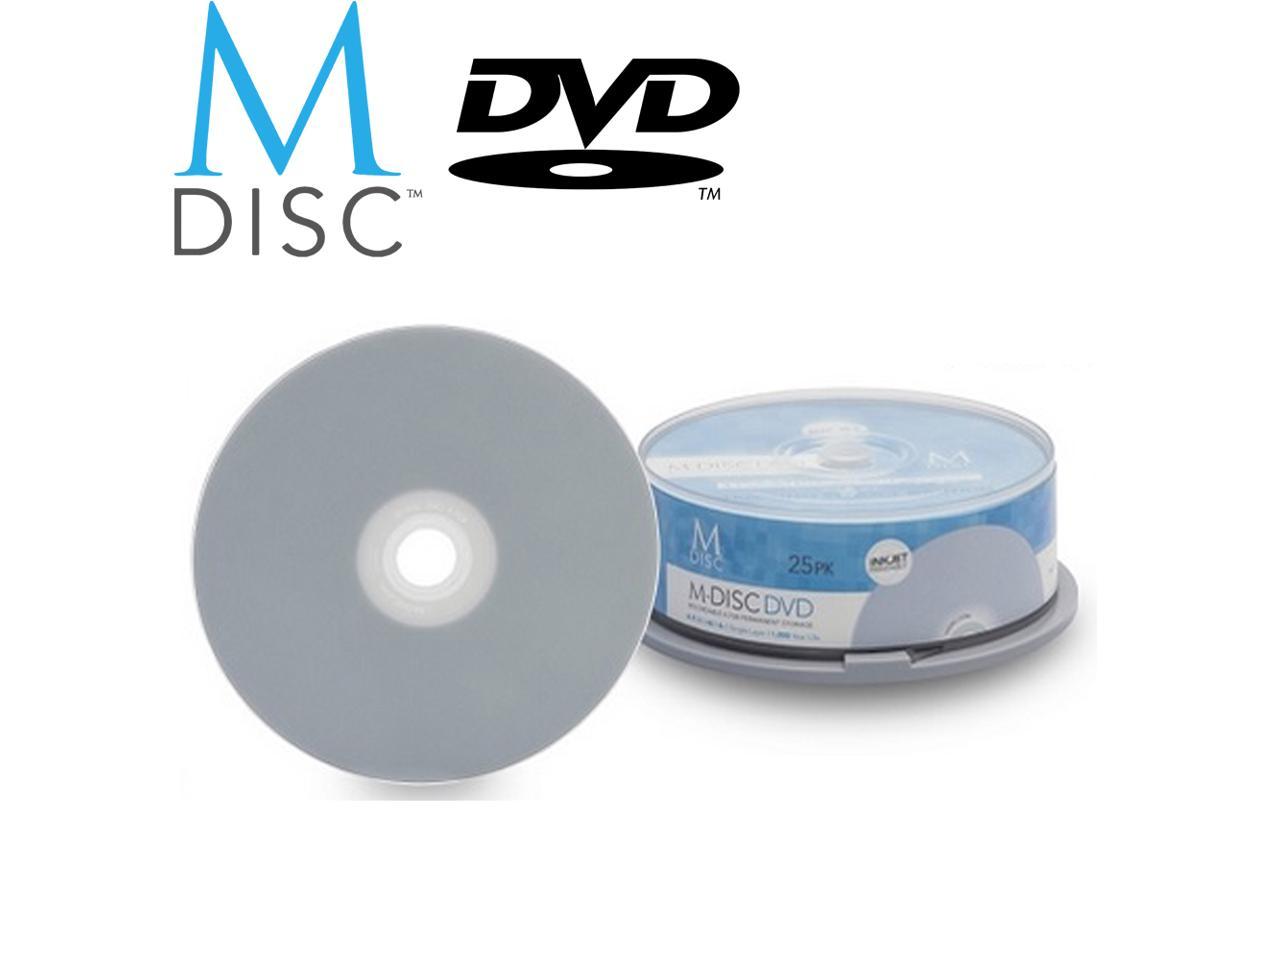 25 Pack Millenniata M Disc Dvd 4 7gb 4x Hd White Inkjet Printable 1000 Year Permanent Data Archival Backup Blank Media Recordable Disc Newegg Com